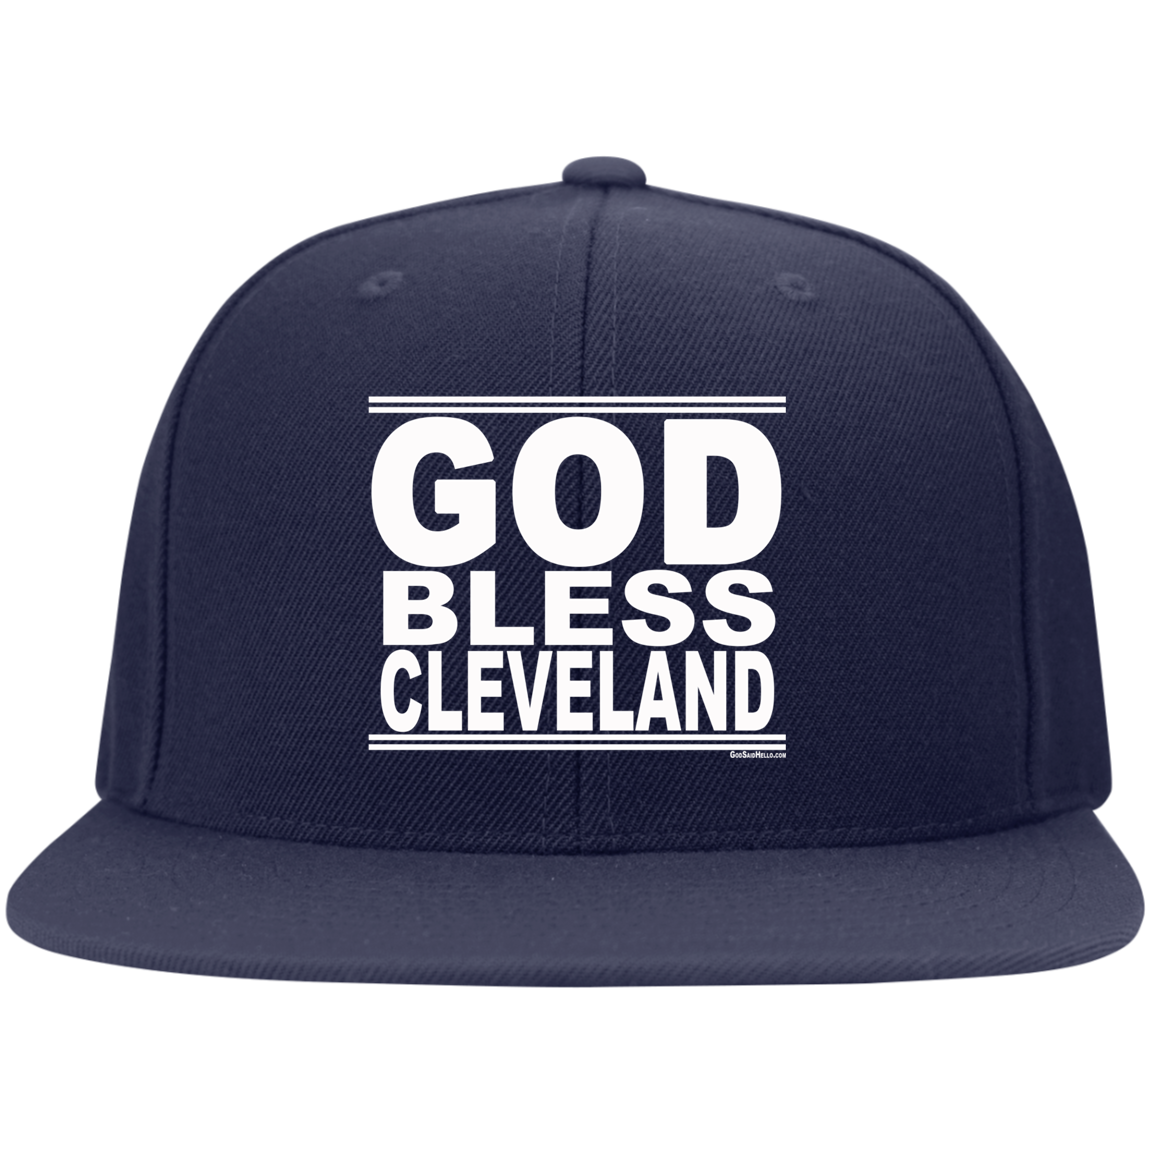 #GodBlessCleveland - Snapback Hat